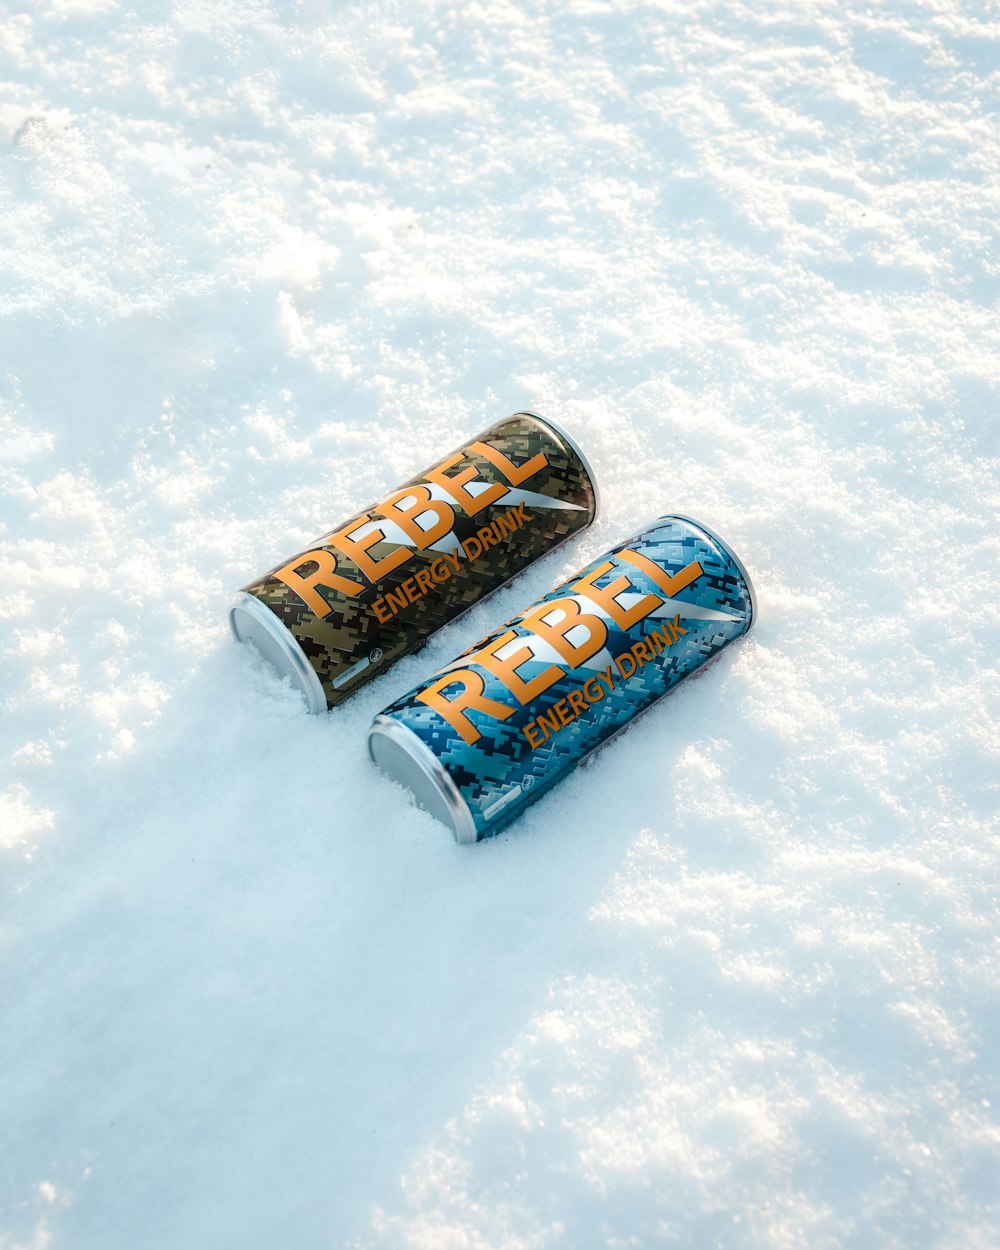 Due lattine di bevanda energetica sedute nella neve